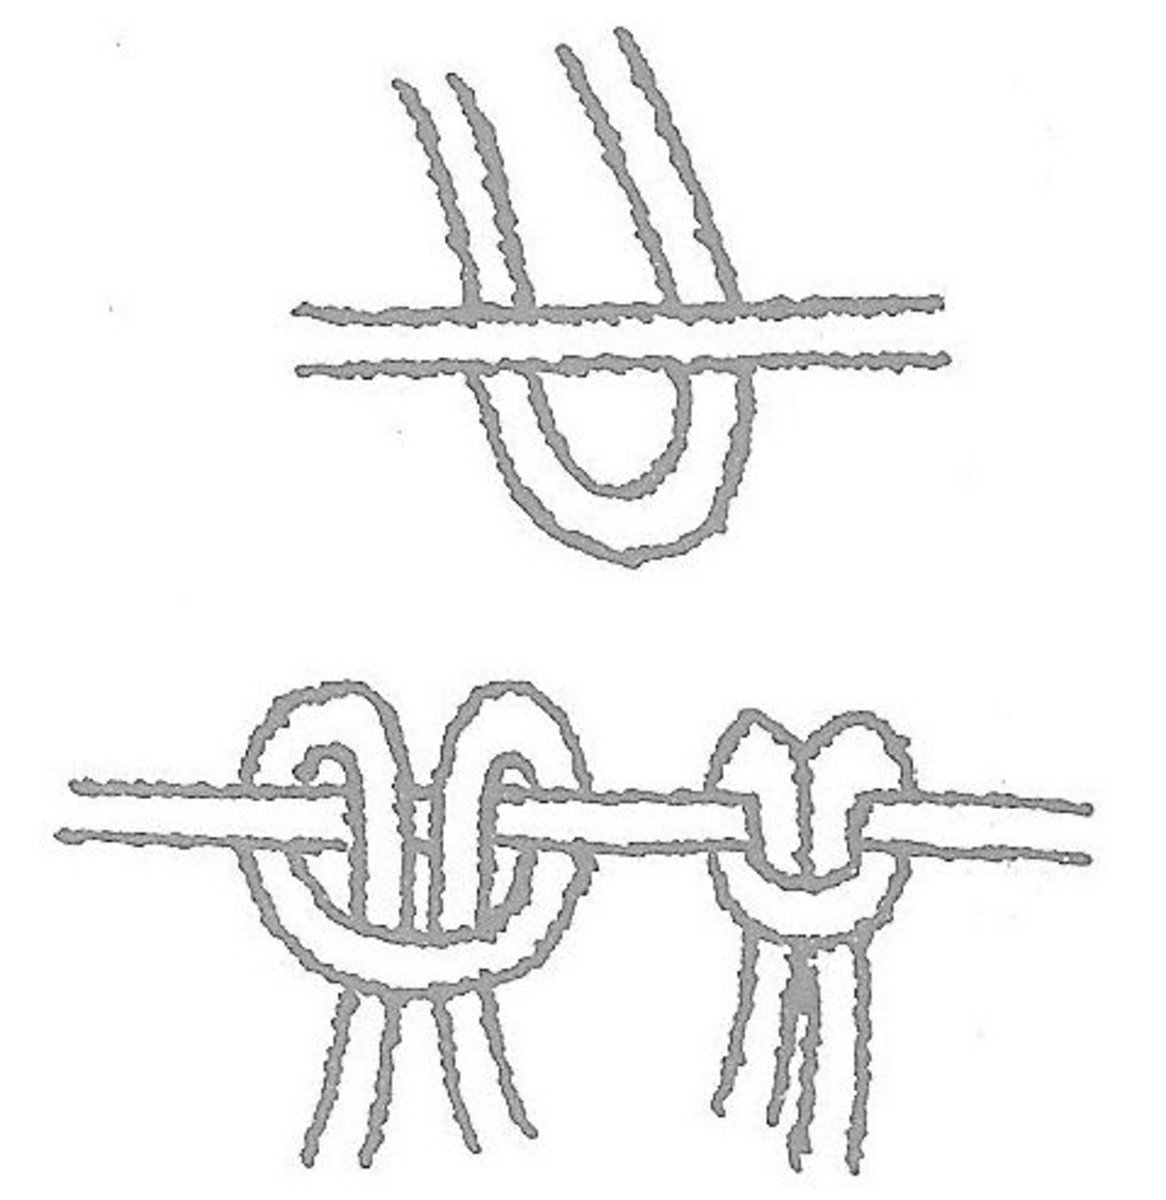 Forward lark's head knot.